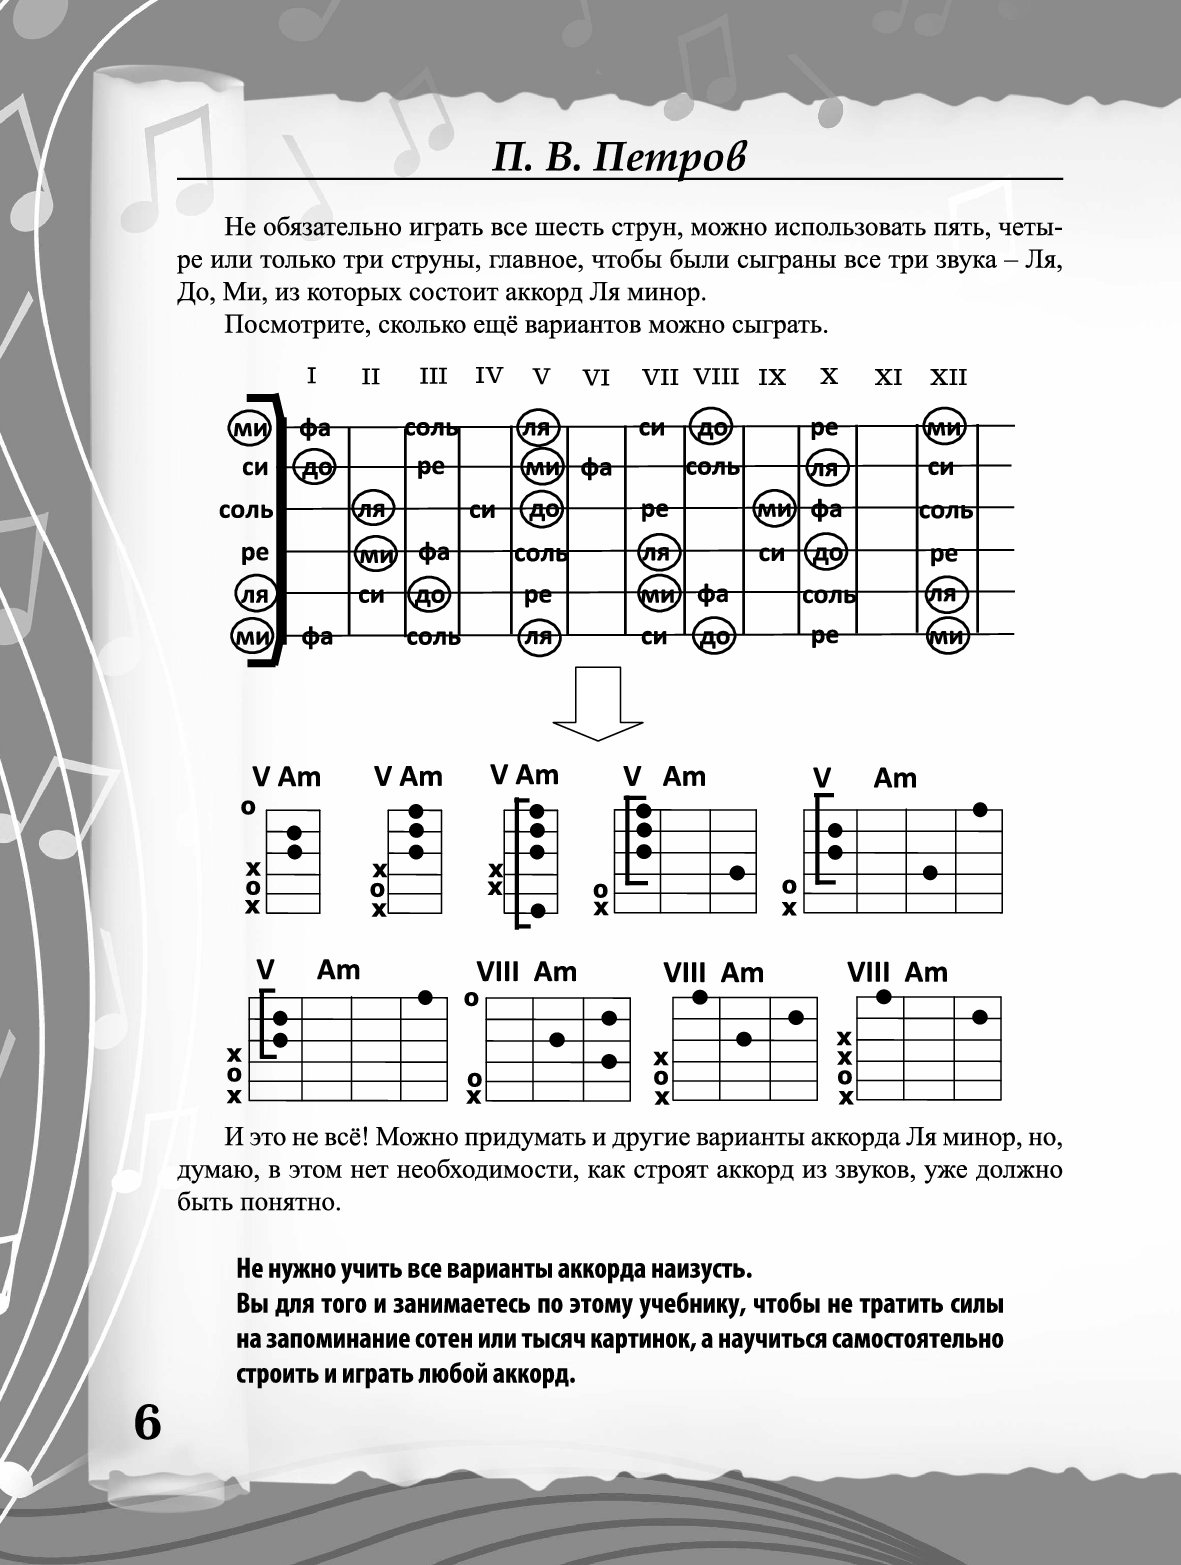 4 аккорда для начинающих. Аккорды на гитаре на 6 струнной гитаре. Аккорды для гитары для начинающих 6 струн. Простые аккорды на гитаре для начинающих 6 струн. Таблица аккордов для гитары 6 струн для начинающих.